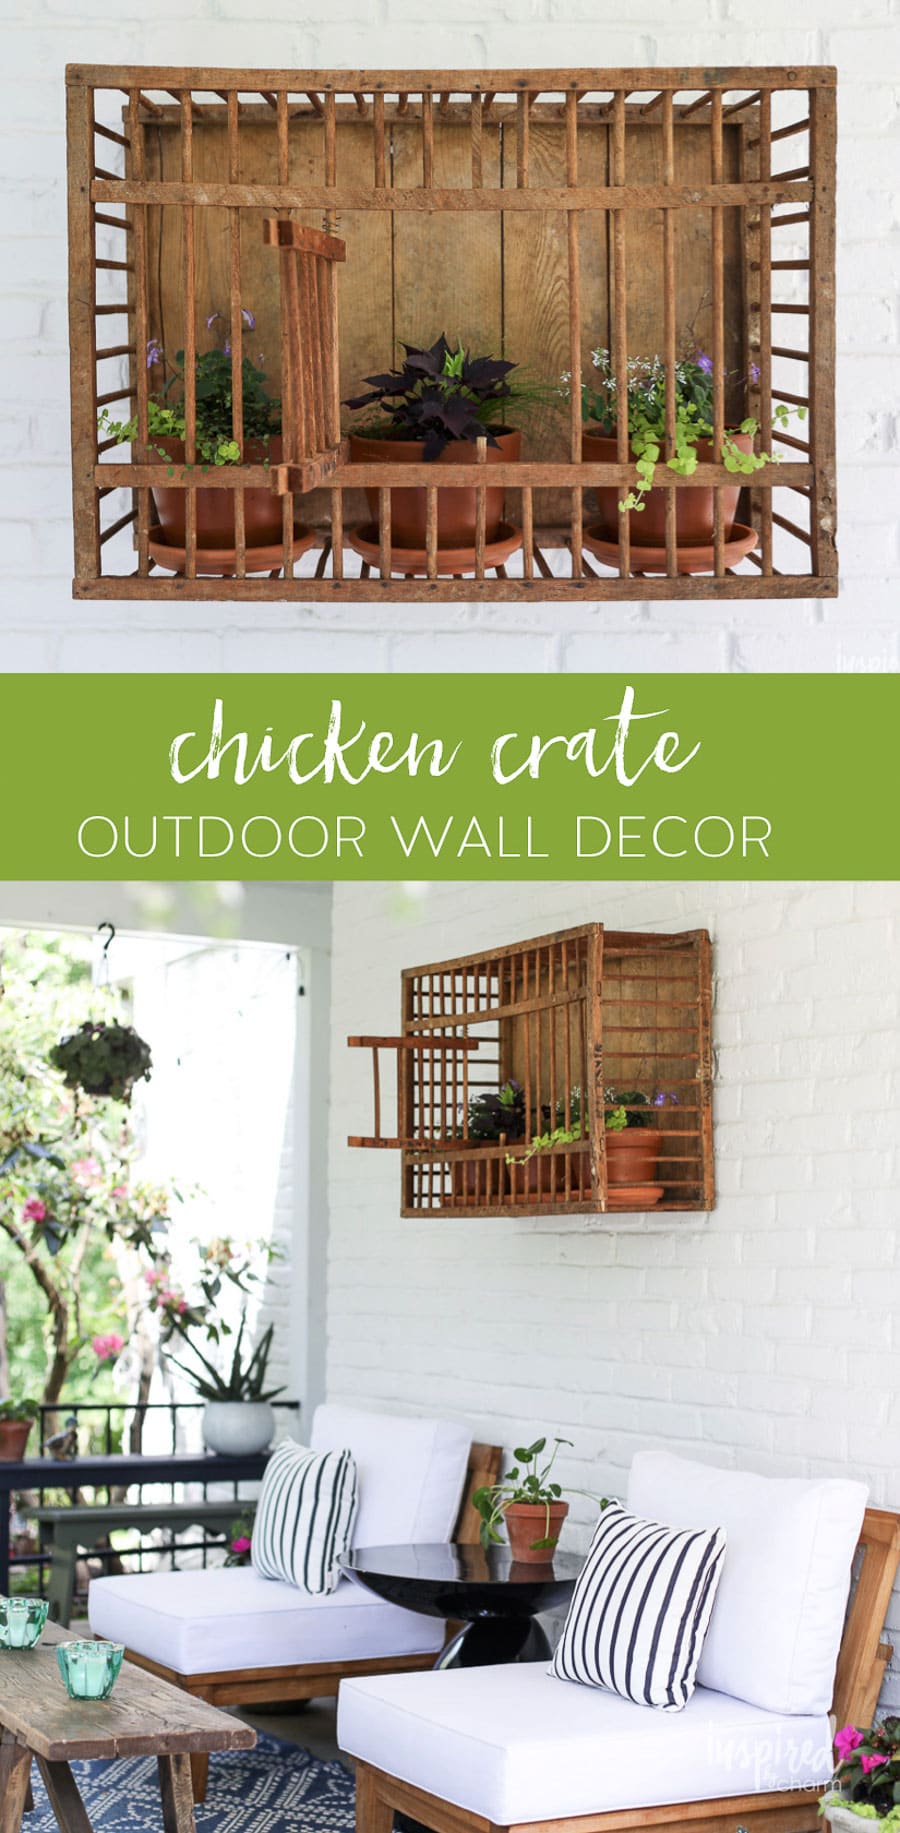 Vintage Chicken Crate: Outdoor Wall Decor #outdoor #decor #planter #walldecor #wall #decorating #vintage